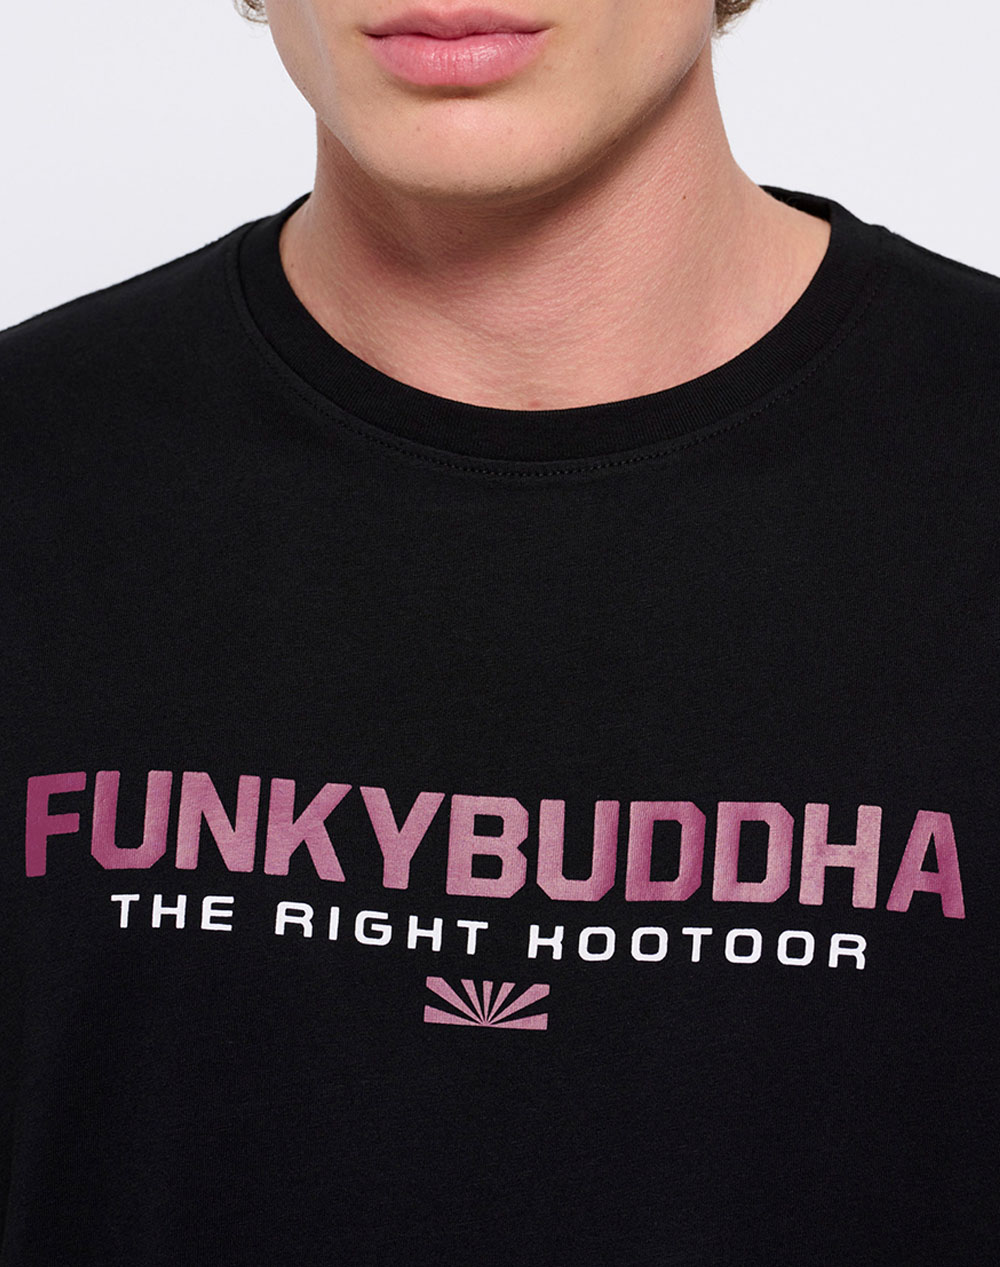 T-shirt with Funky Buddha print